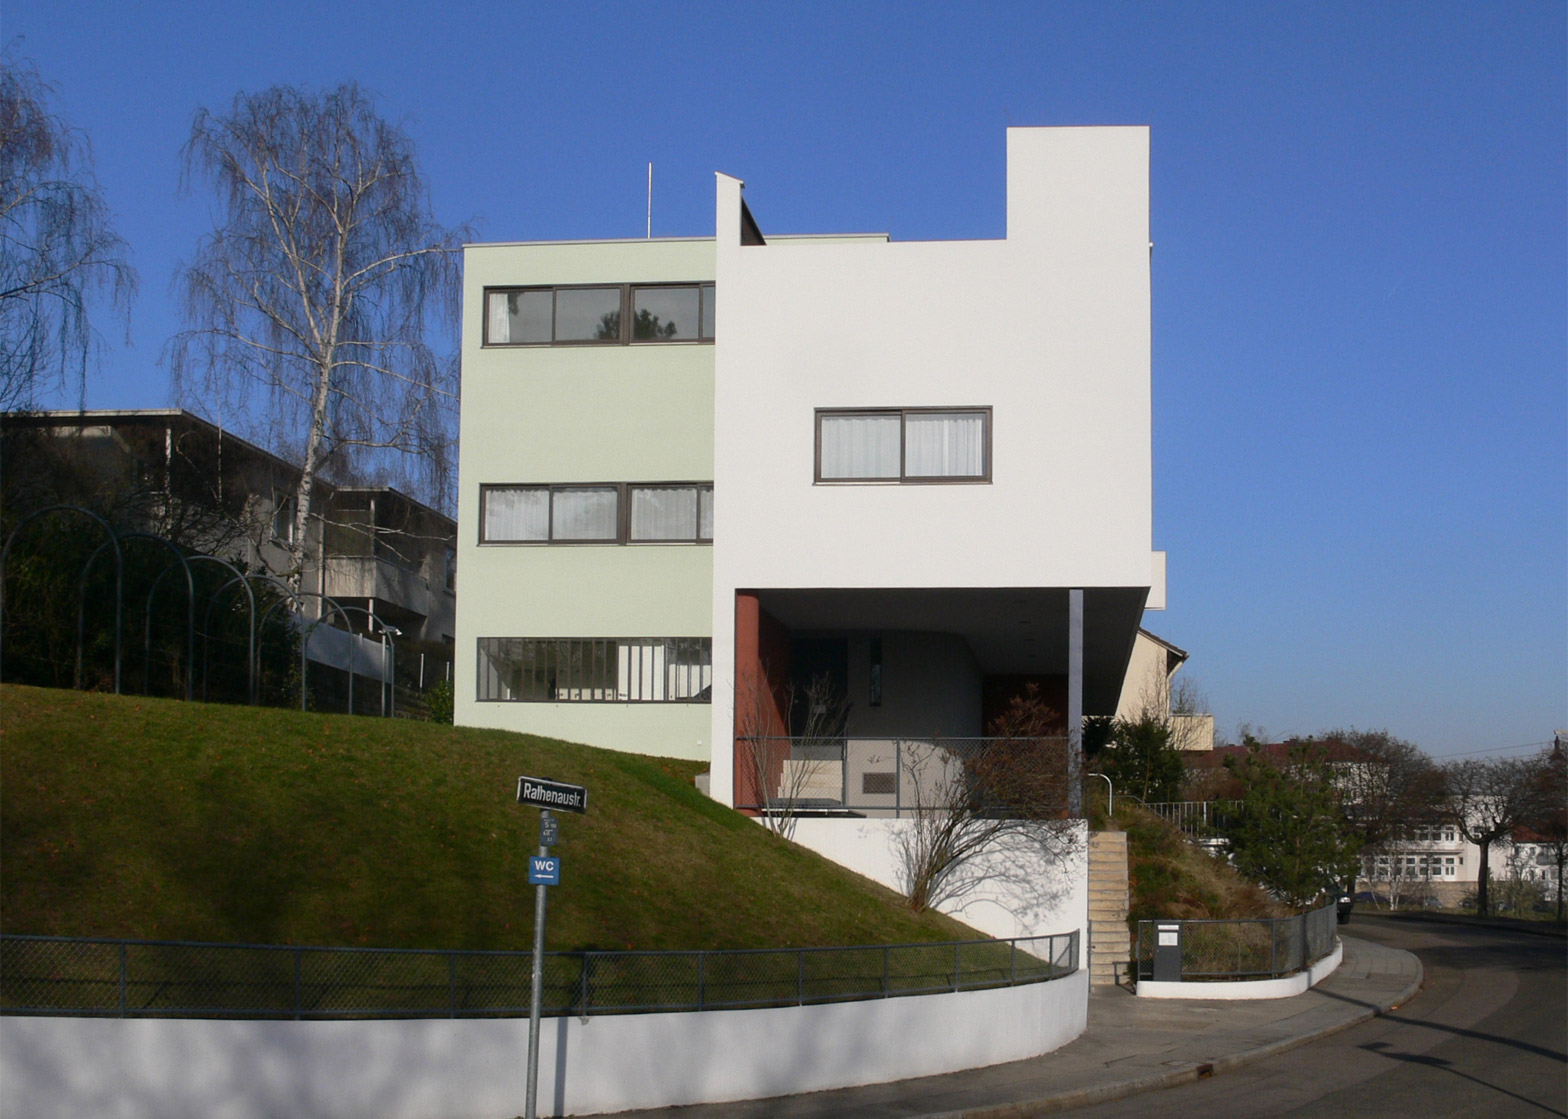 Le Corbusier's Weissenhof Estate housing in Stuttgart